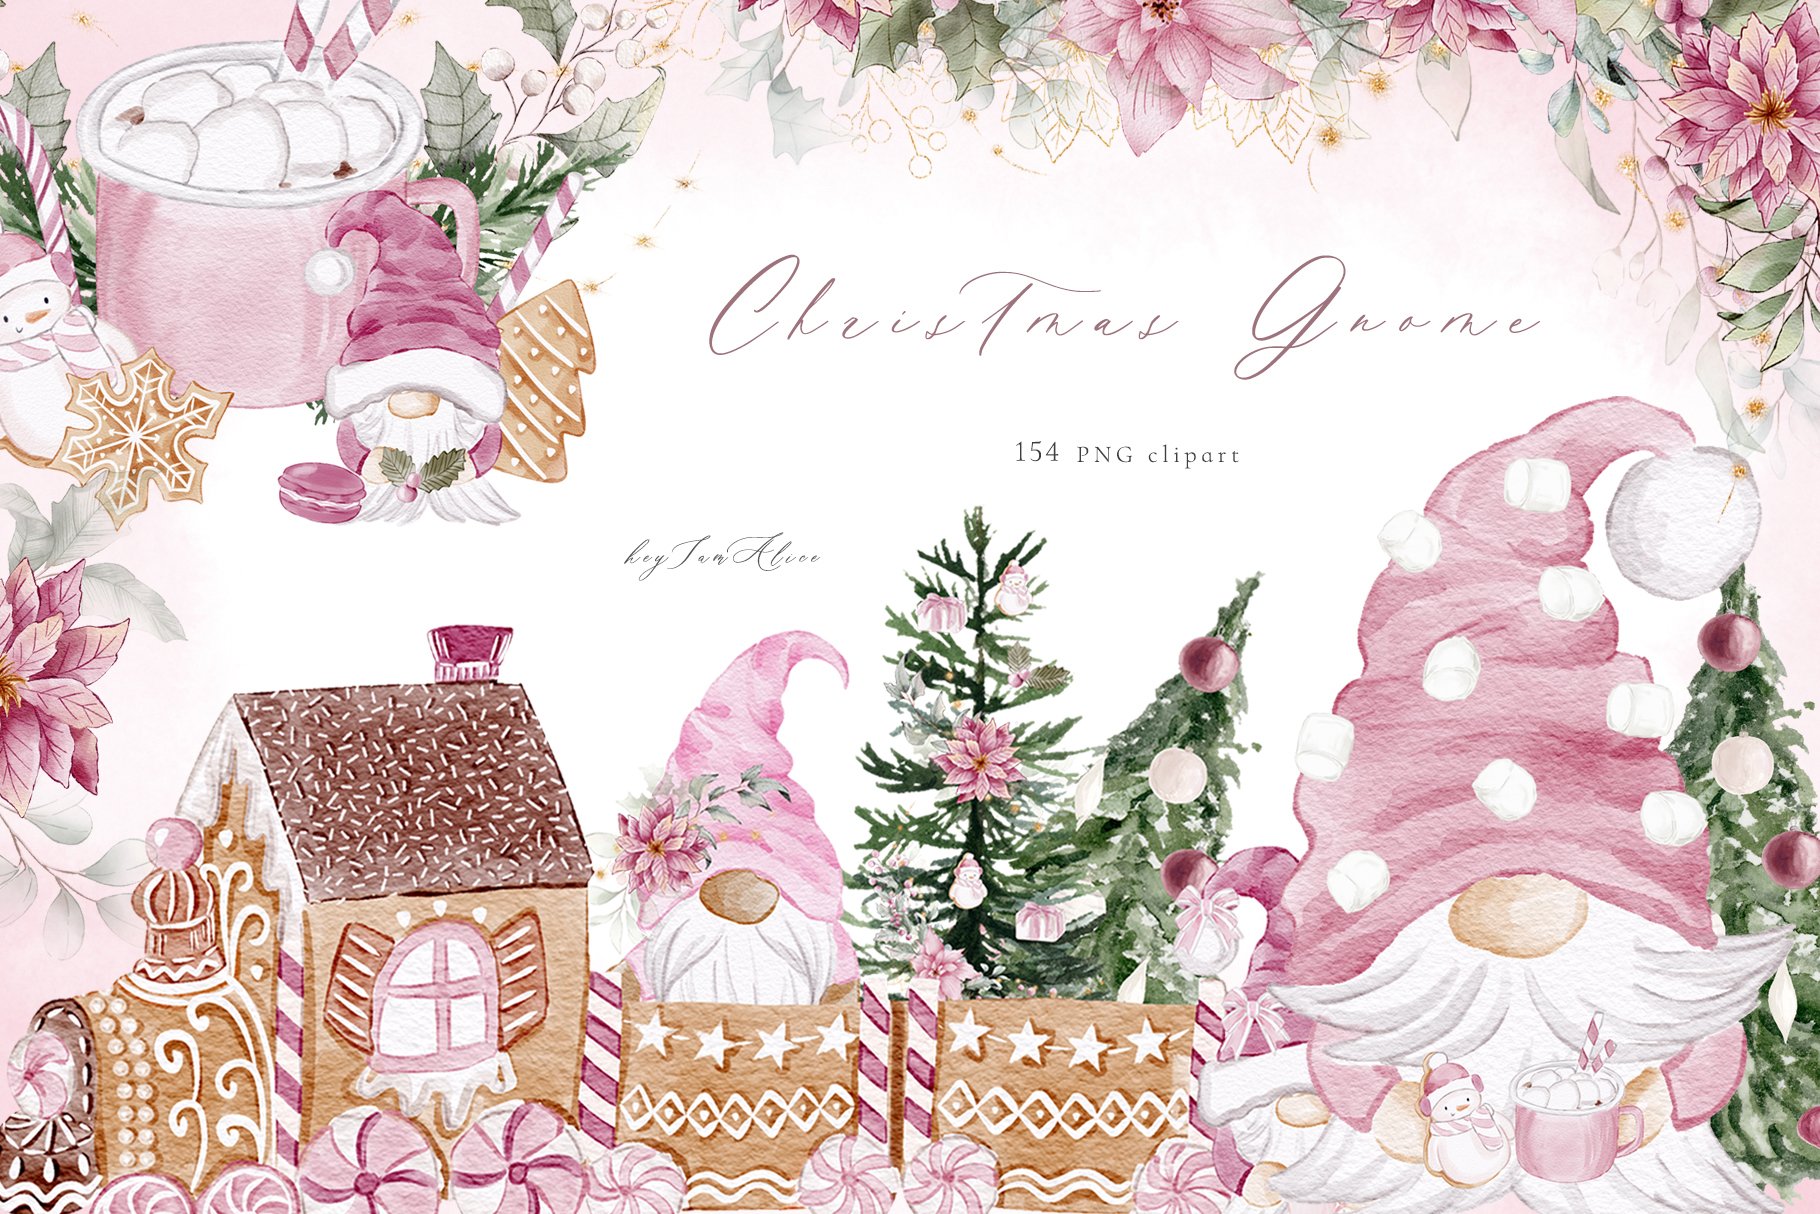 Cute pink watercolor Christmas illustration.